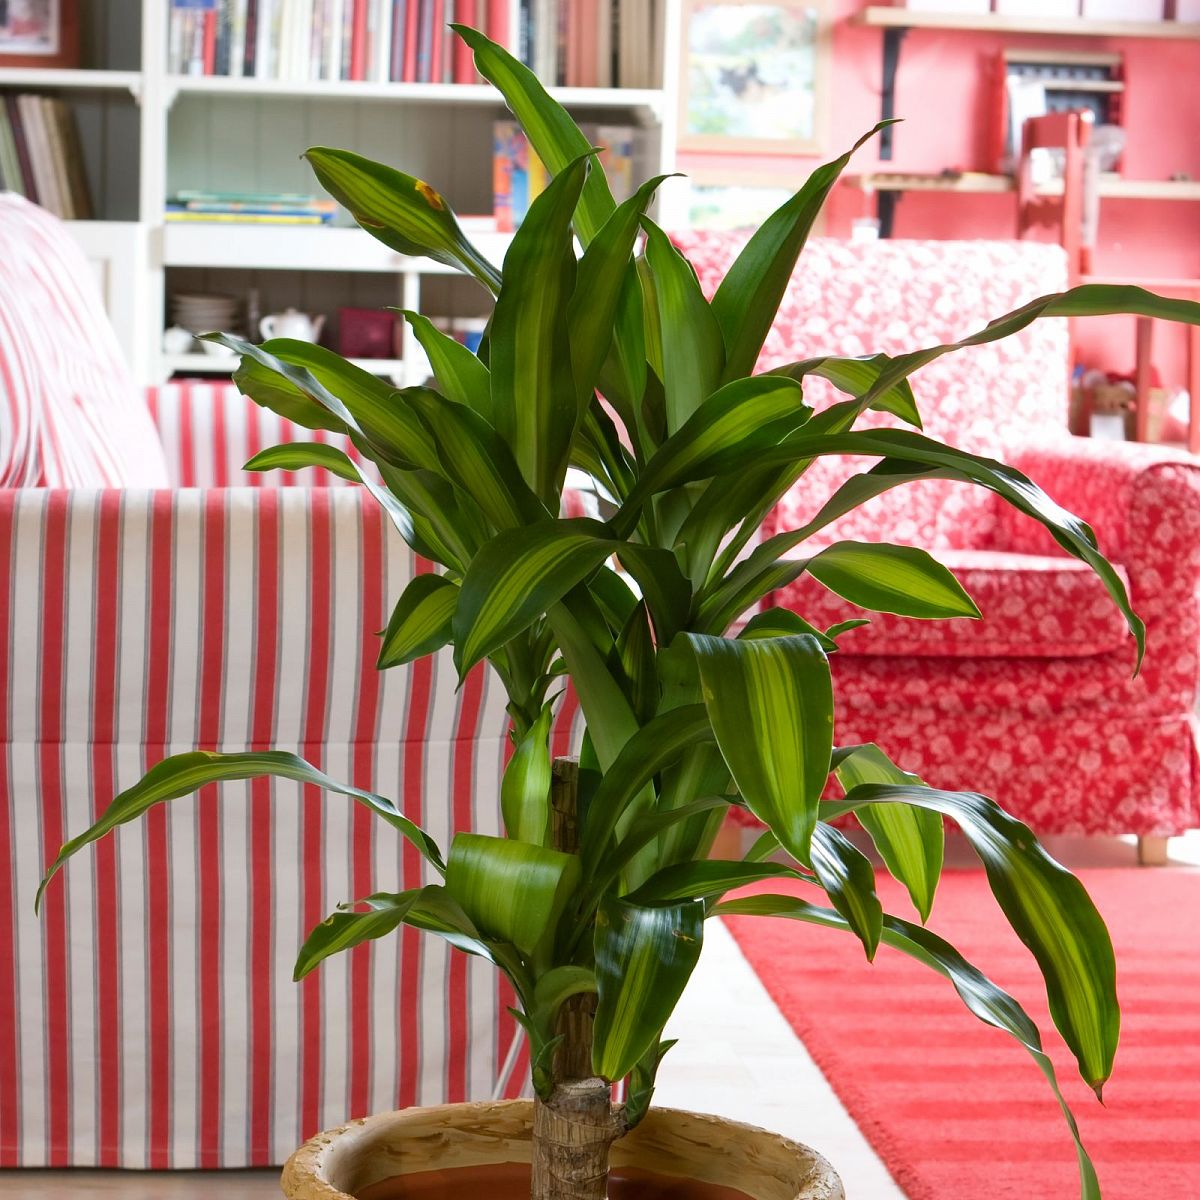 Colorful Corn Plant Dracaena fragrans 'Cintho' Indoor House Plants